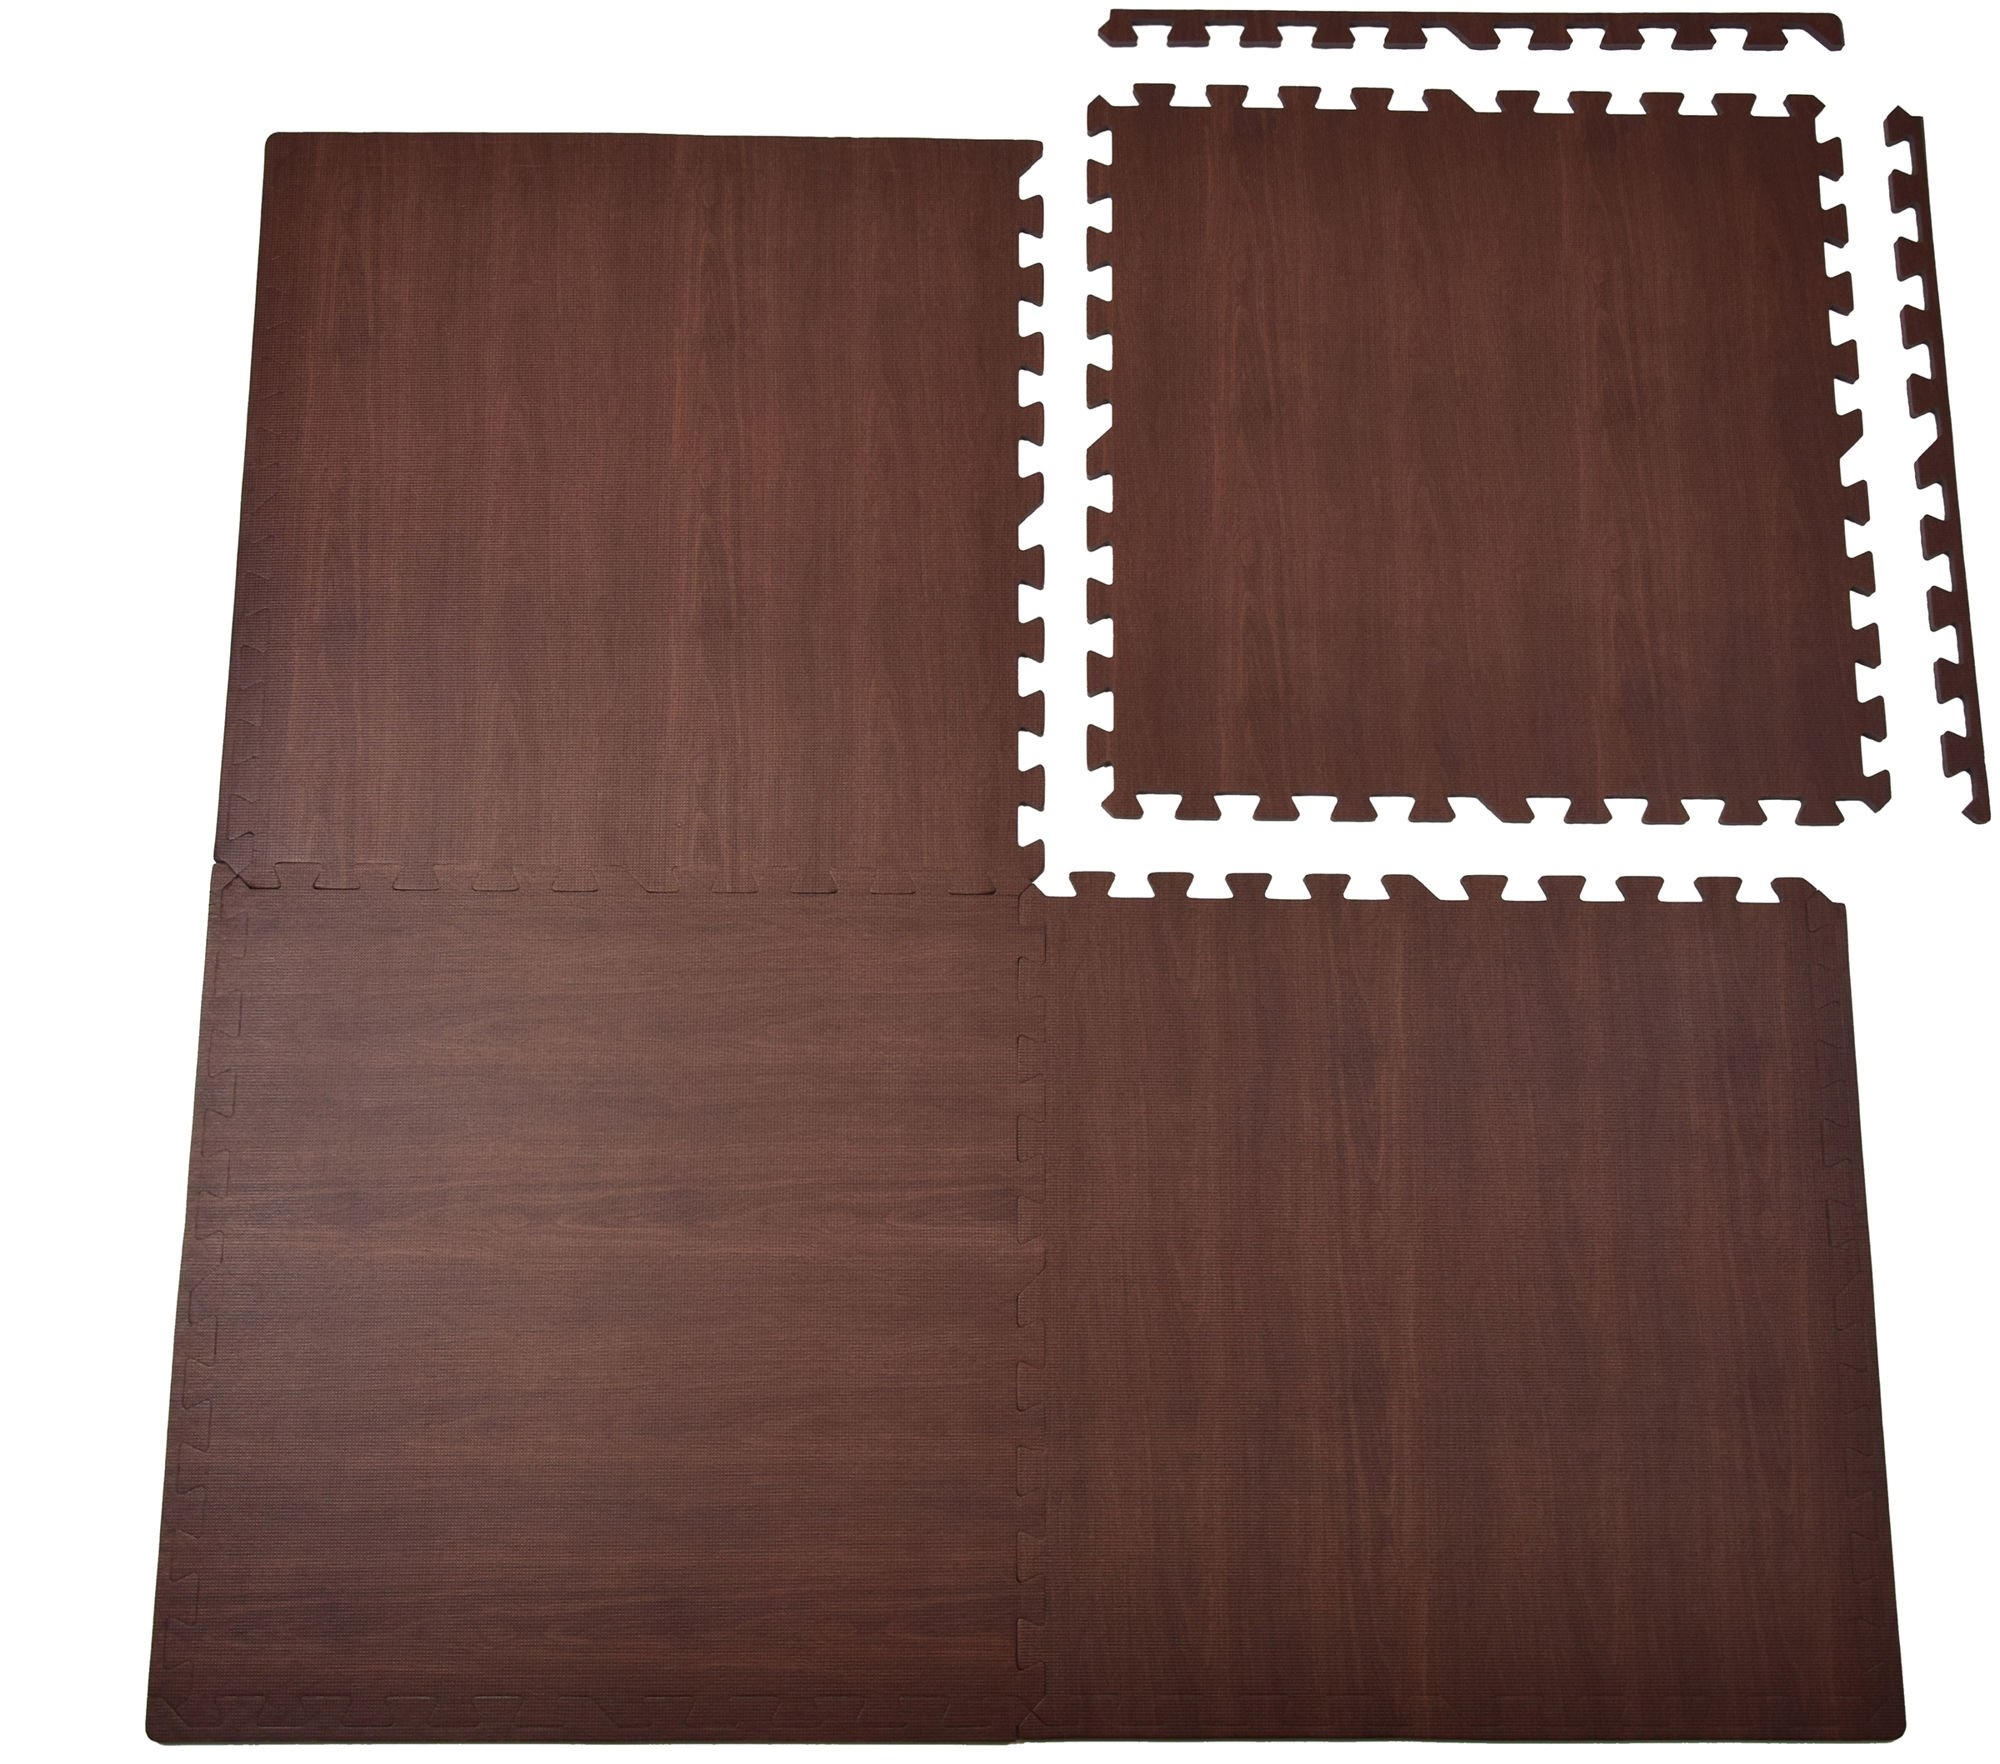 Humbi Puzzle piankowe Mata piankowa panele ciemne 62 x 62 x 1 cm 4 szt.